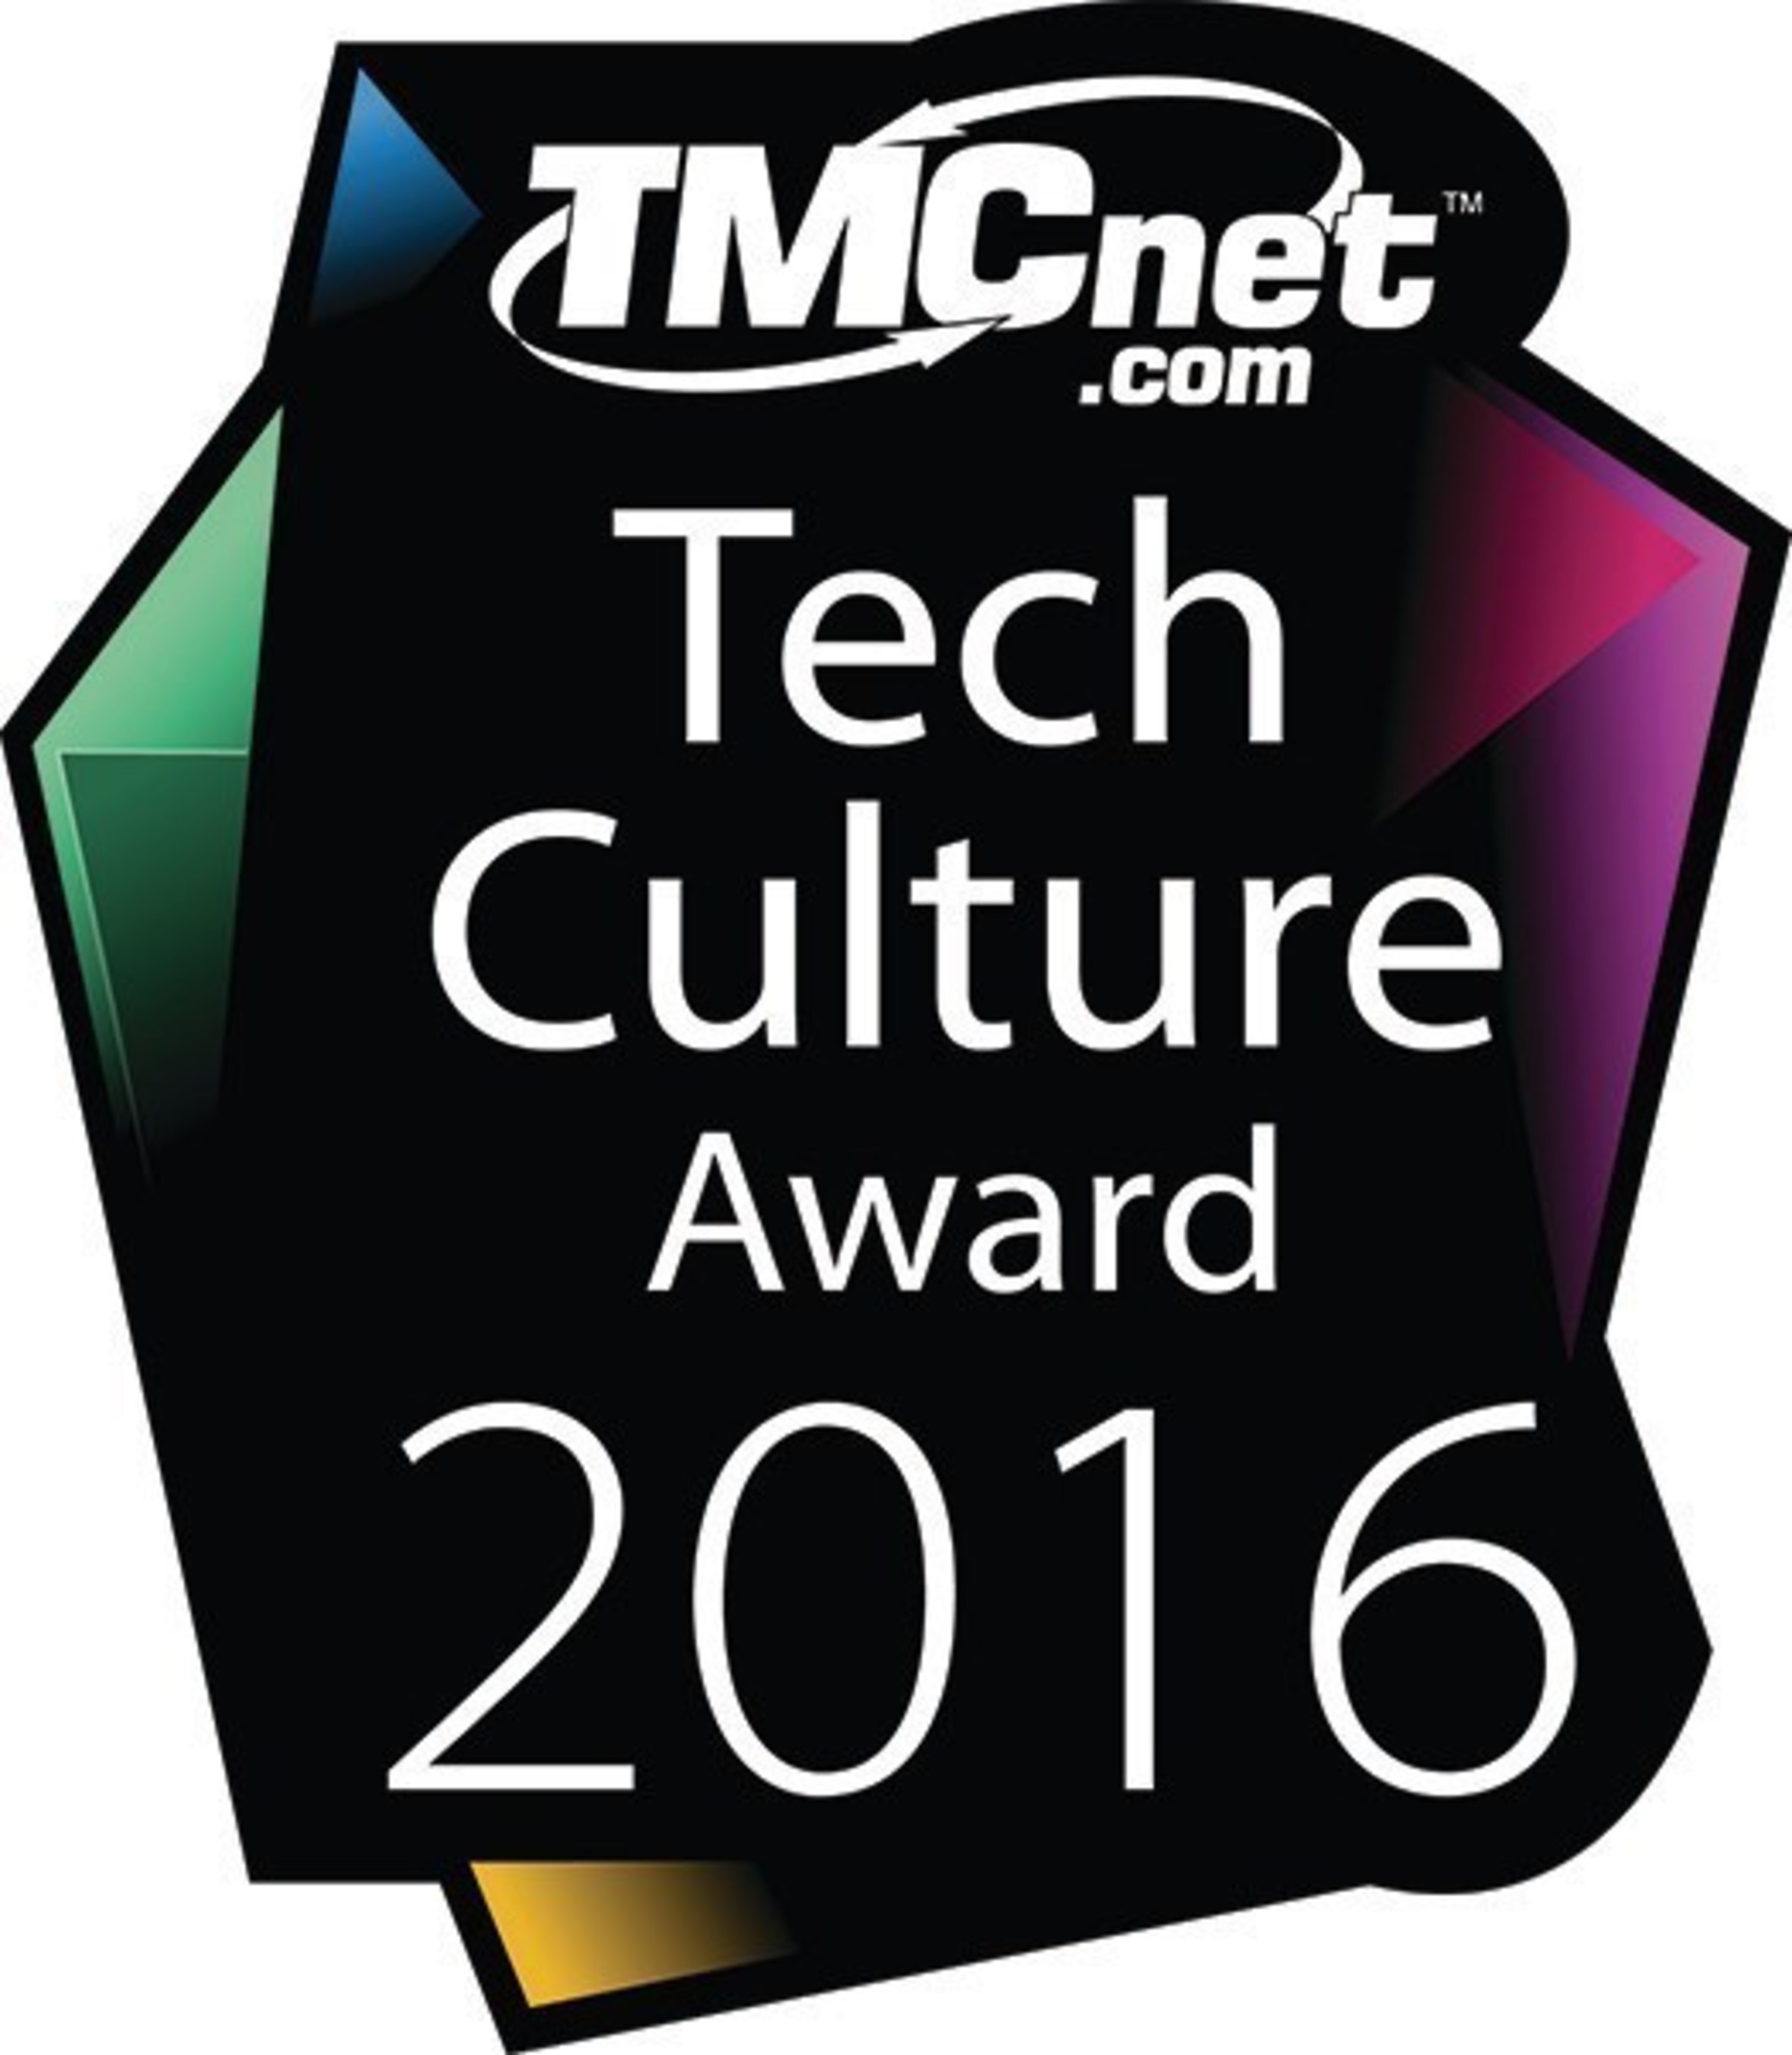 TMCnet Tech Culture award 2016 logo (PRNewsFoto/Mahindra Comviva)